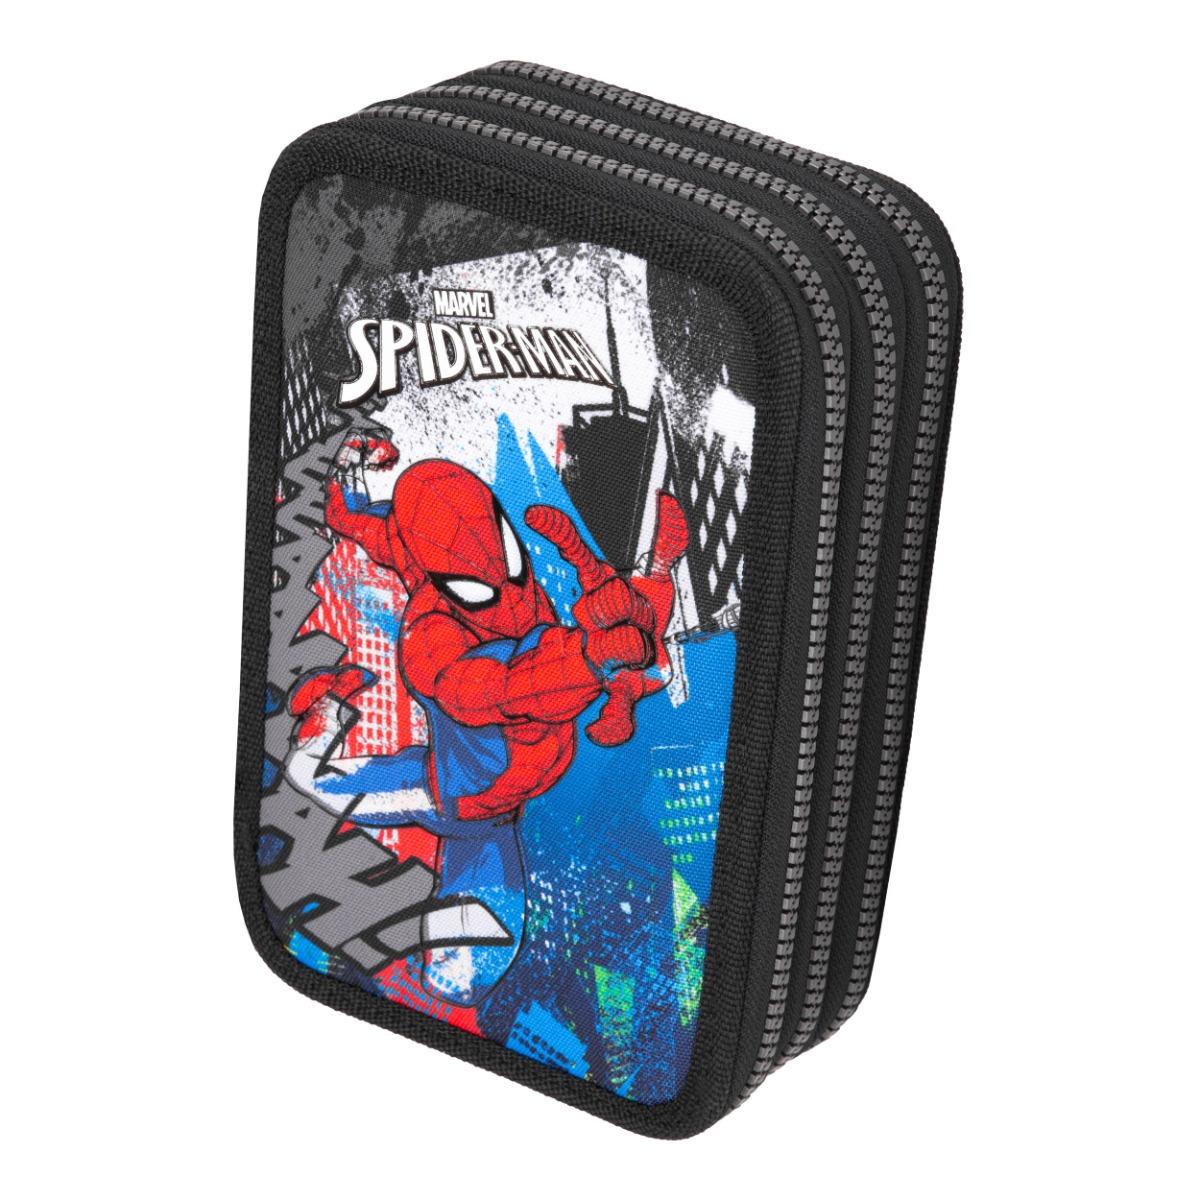 Ученически несесер с пособия Coolpack - Jumper 3 - Spiderman